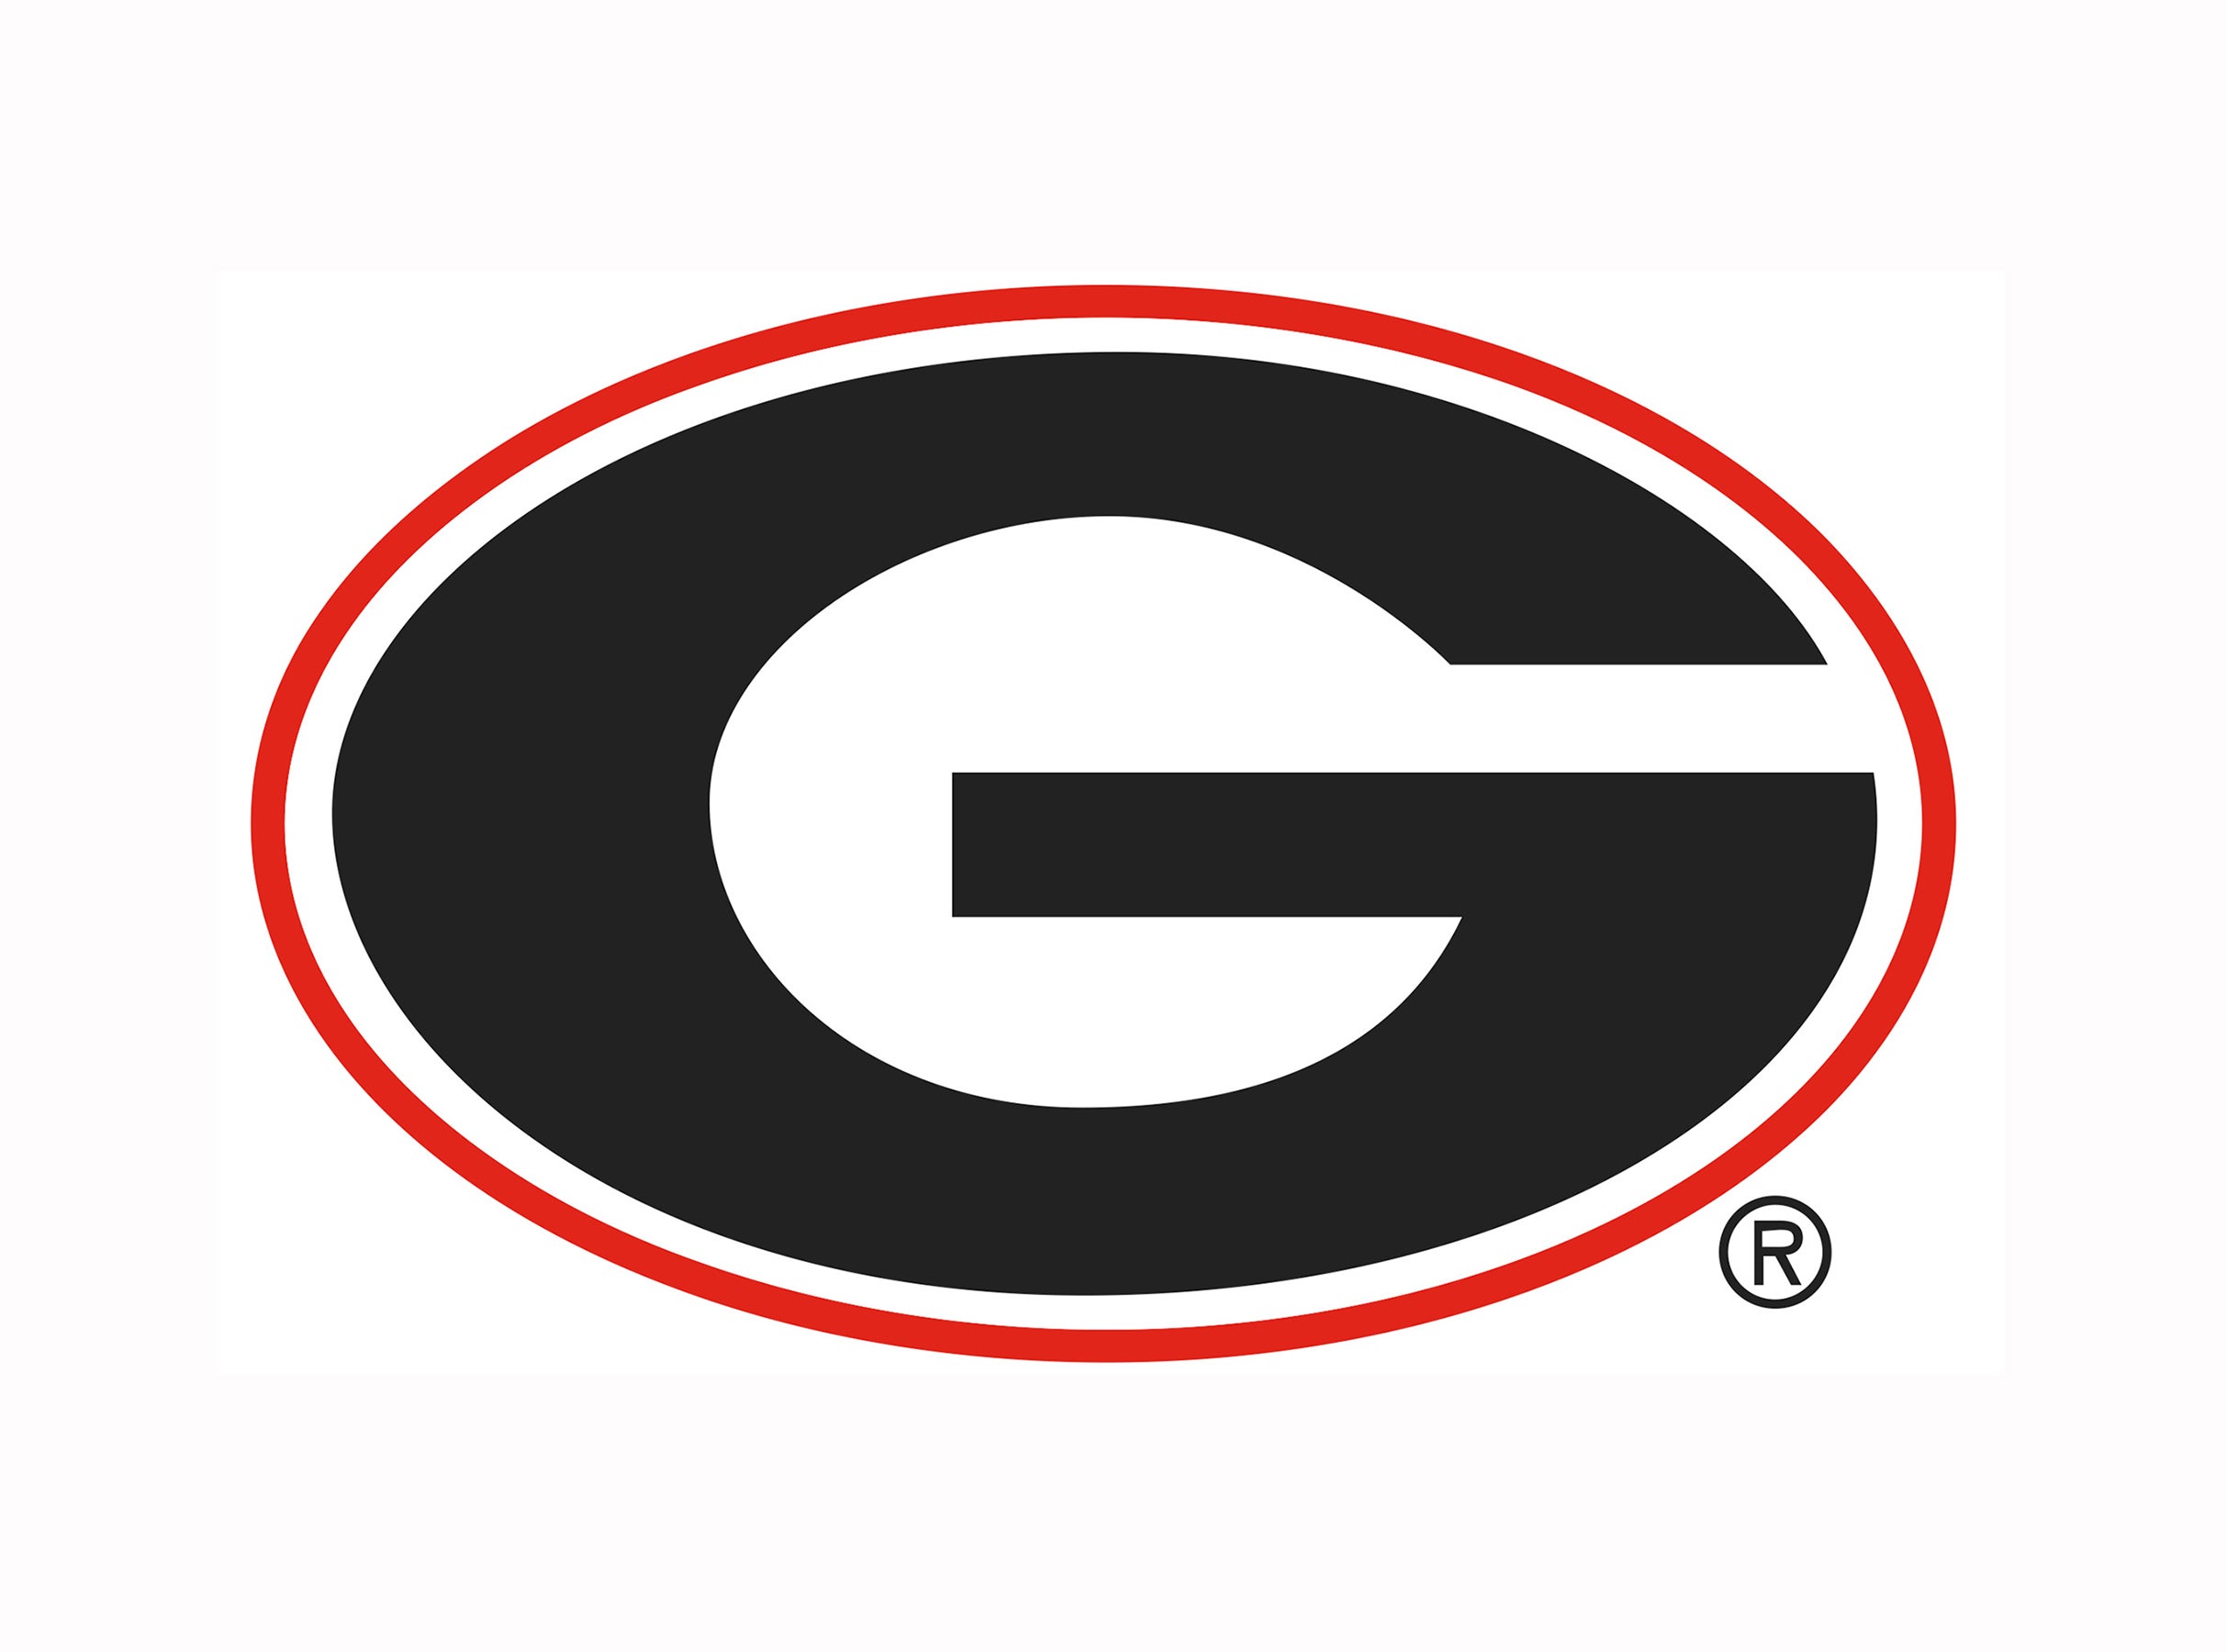 Georgia Bulldogs Football vs. Mississippi State Bulldogs Football hero